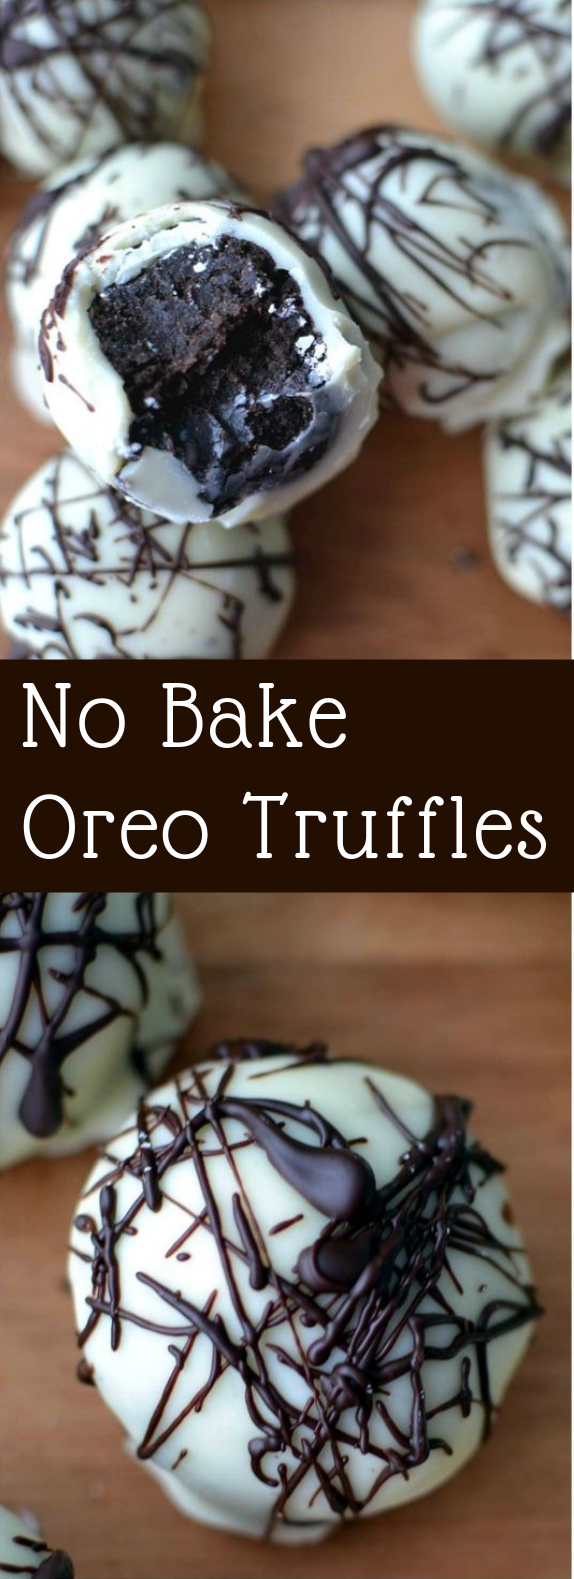 Oreo Truffles #Oreo #Dessert